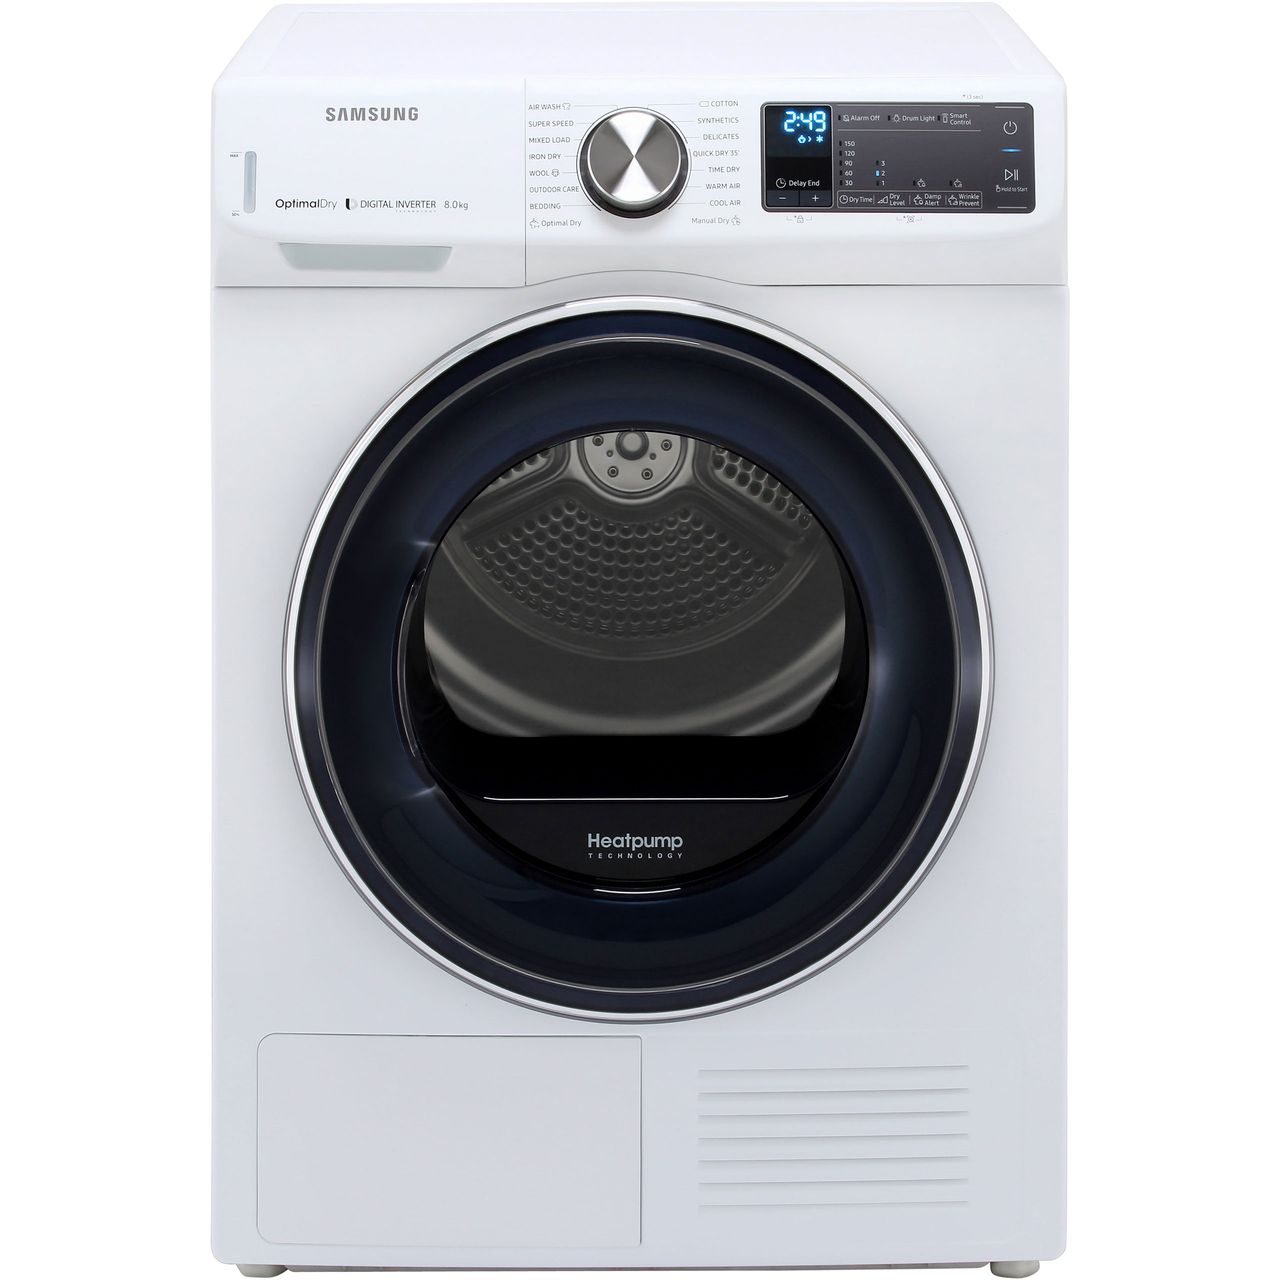 Samsung DV80N62542W 8Kg Heat Pump Tumble Dryer Review